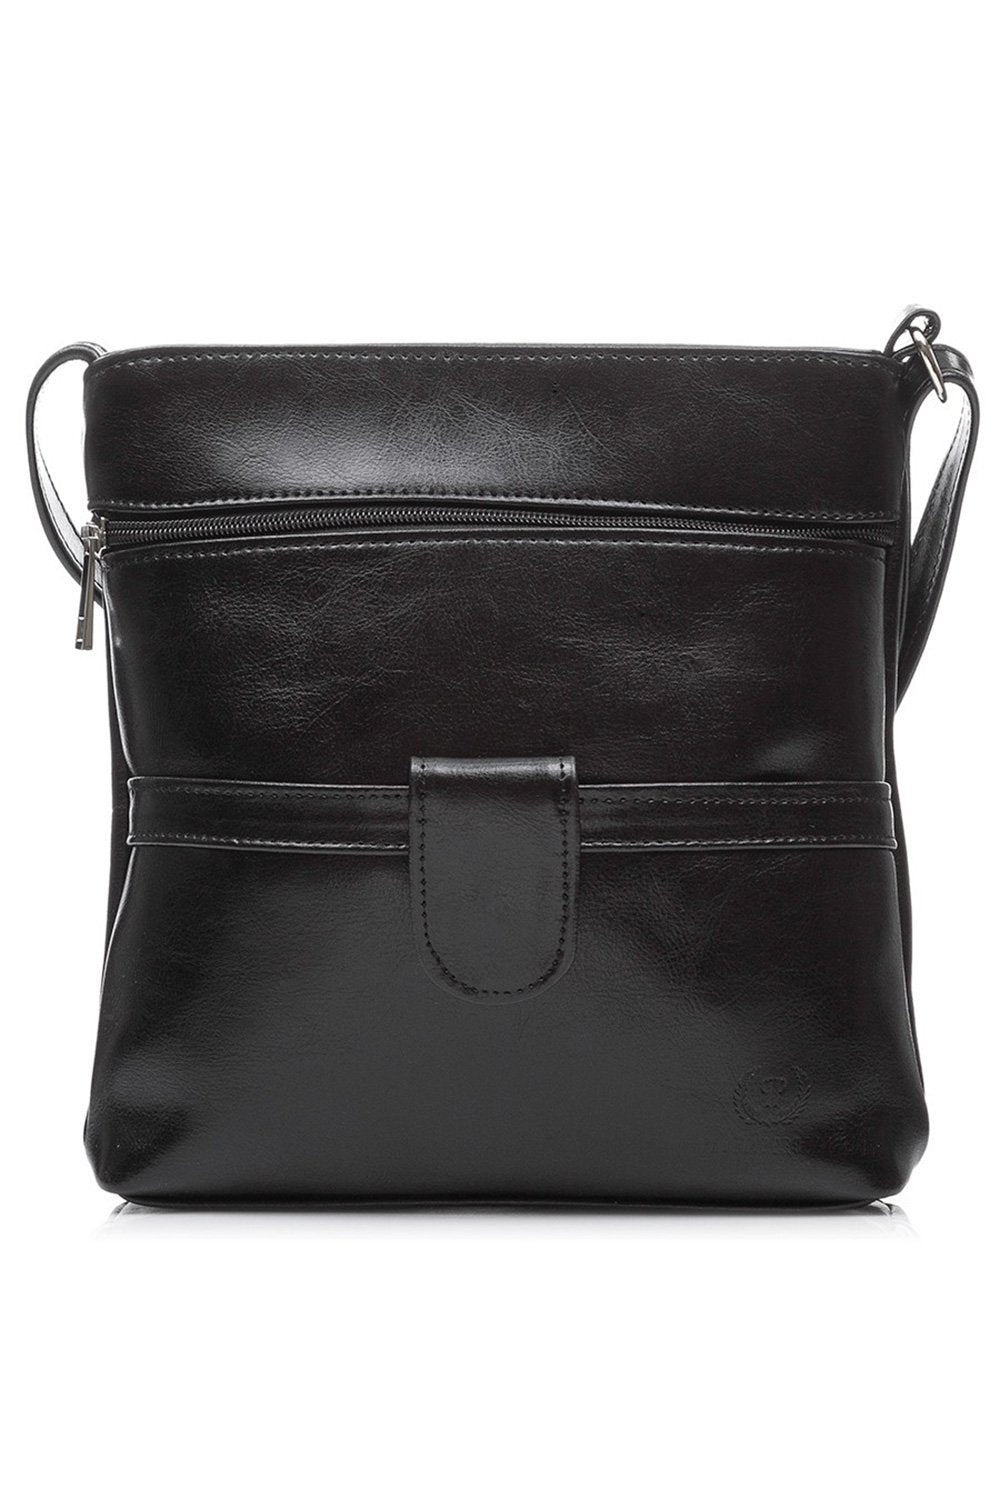 Natural leather bag model 173158 Hurtownia Galanter Posh Styles Apparel